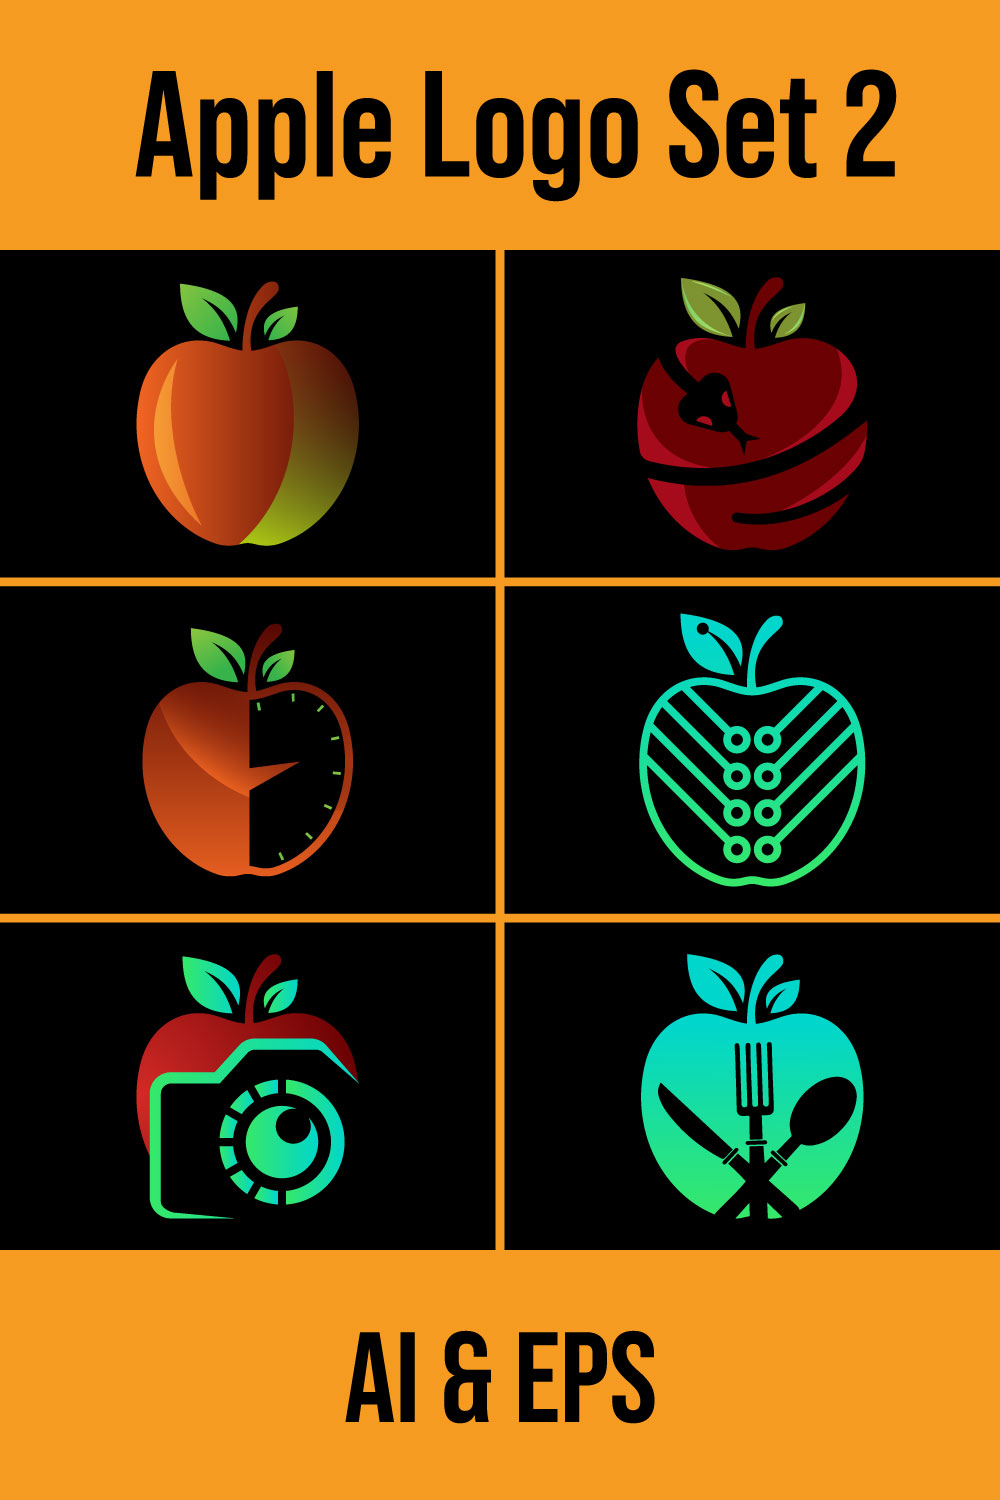 Apple Vector Logo Set Pinterest.